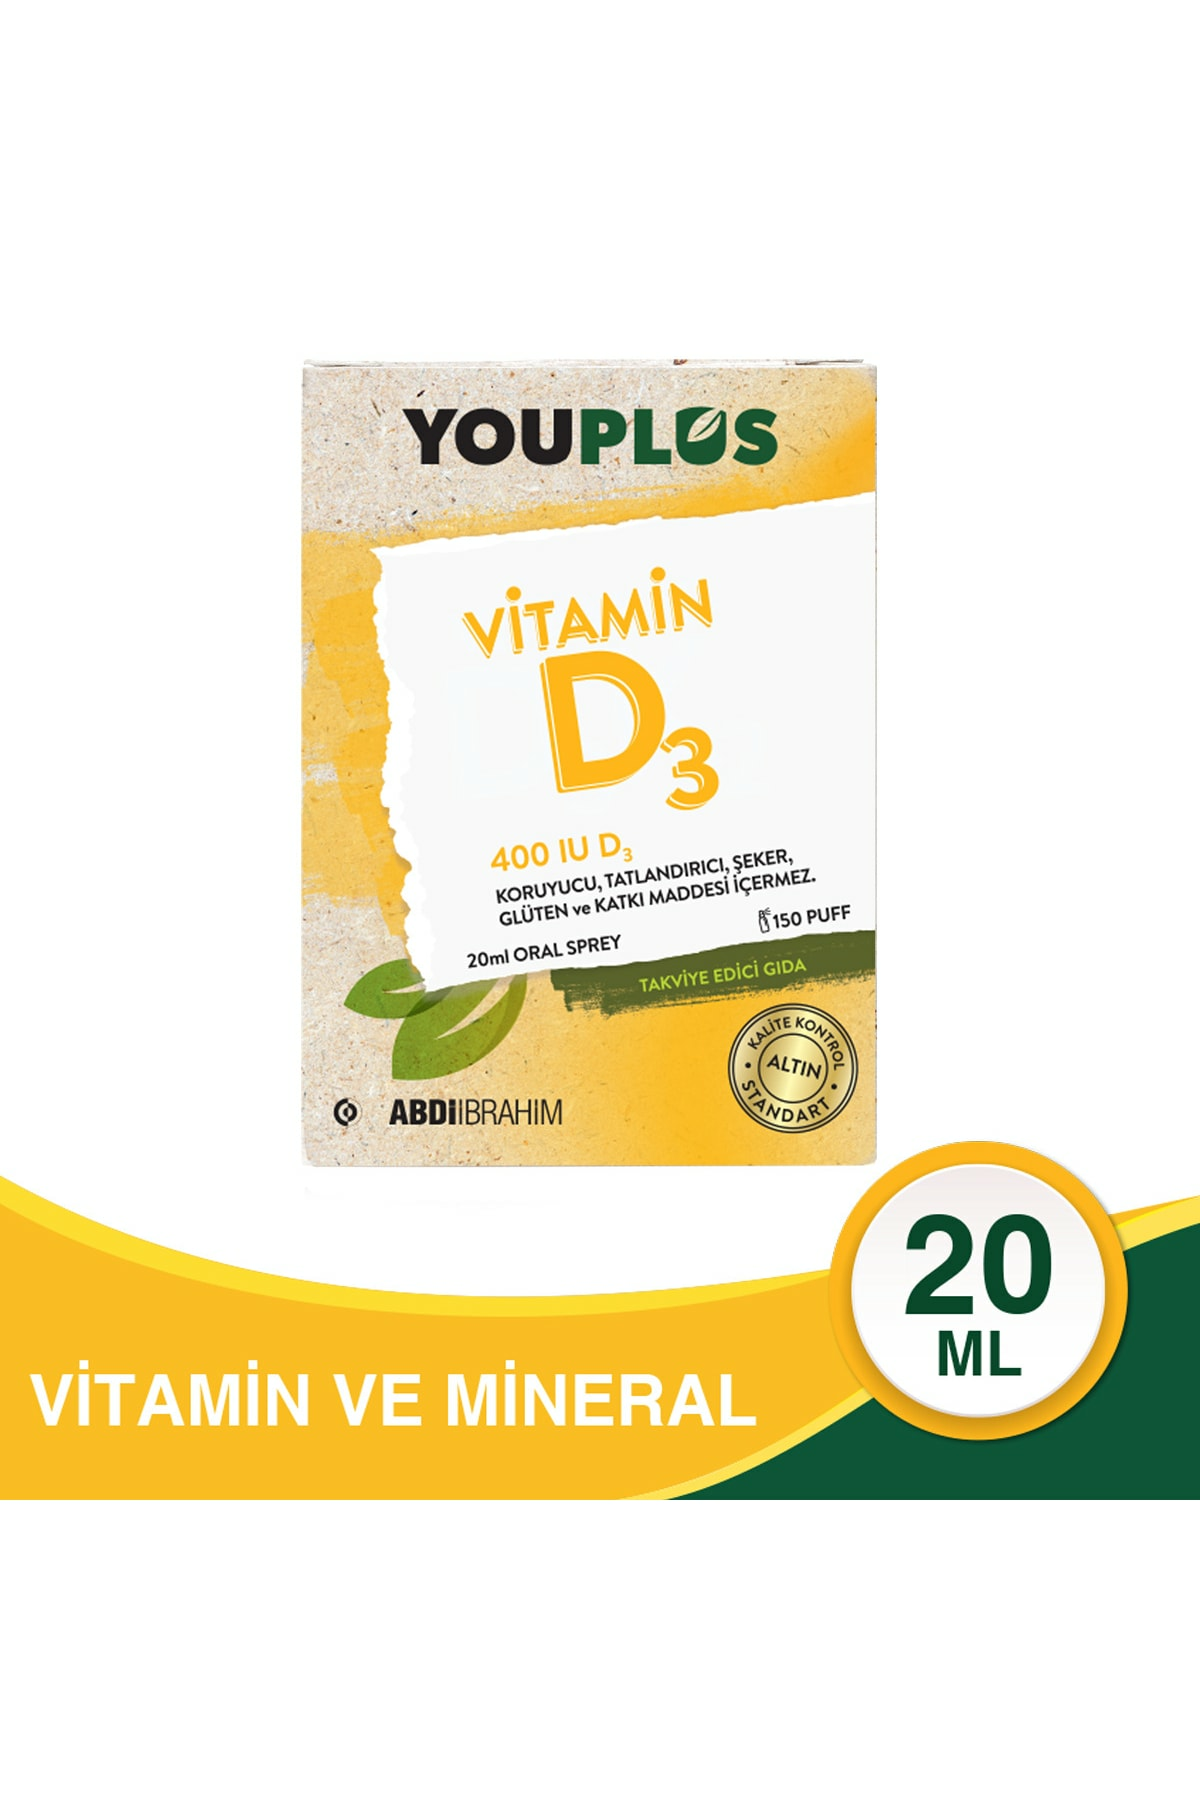 Youplus Vitamin D3 400 IU 20 ML Oral Damla